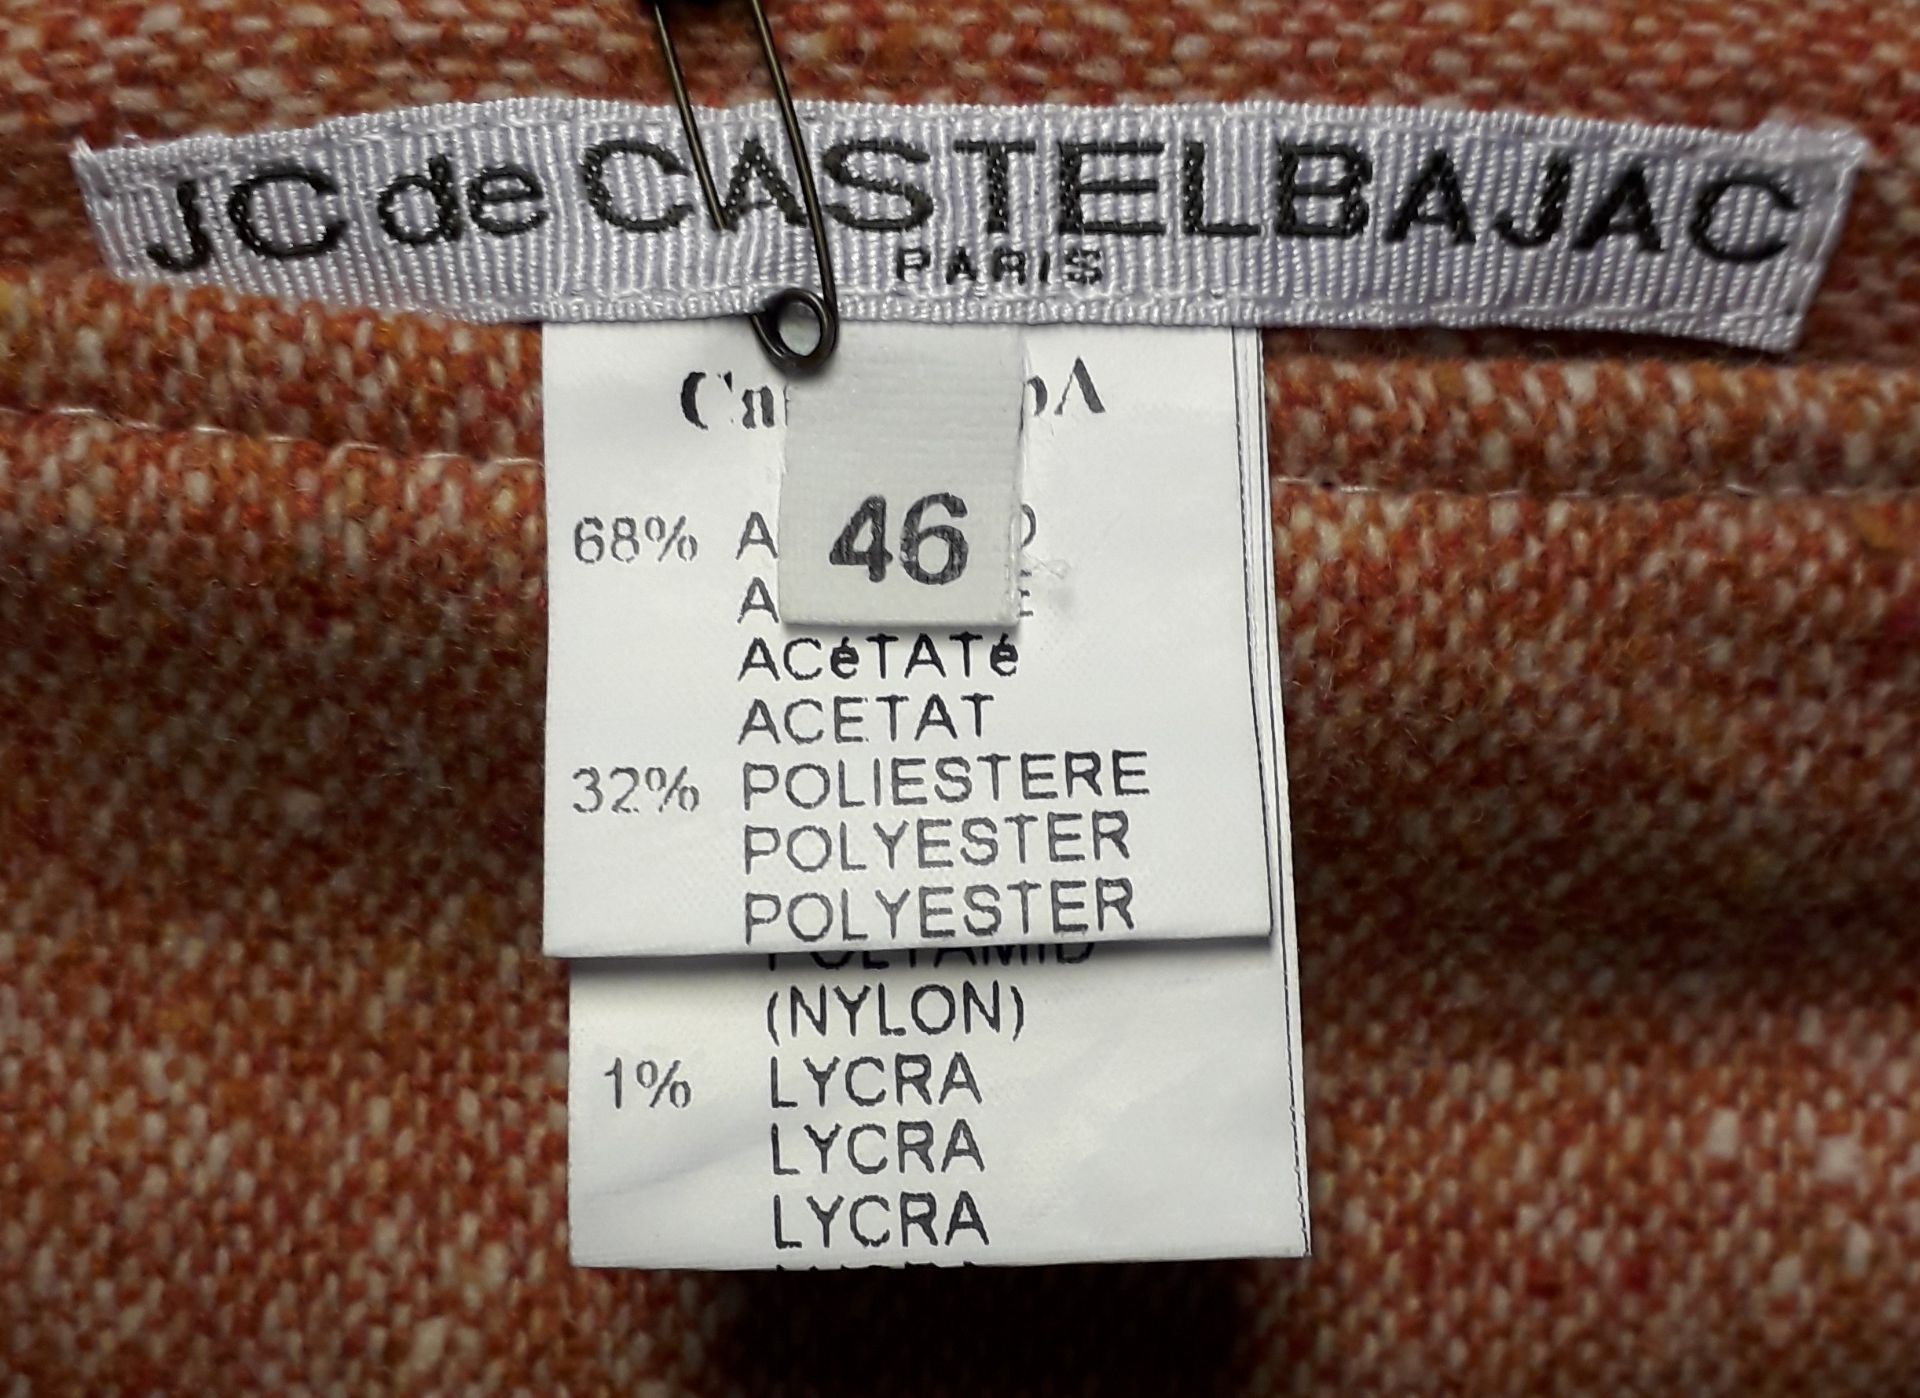 1 x Jc De Castlebajac Paris Tangerine Pencil Skirt - Size: 46 - Material: Lining 68% Acetate, 32% - Image 2 of 3